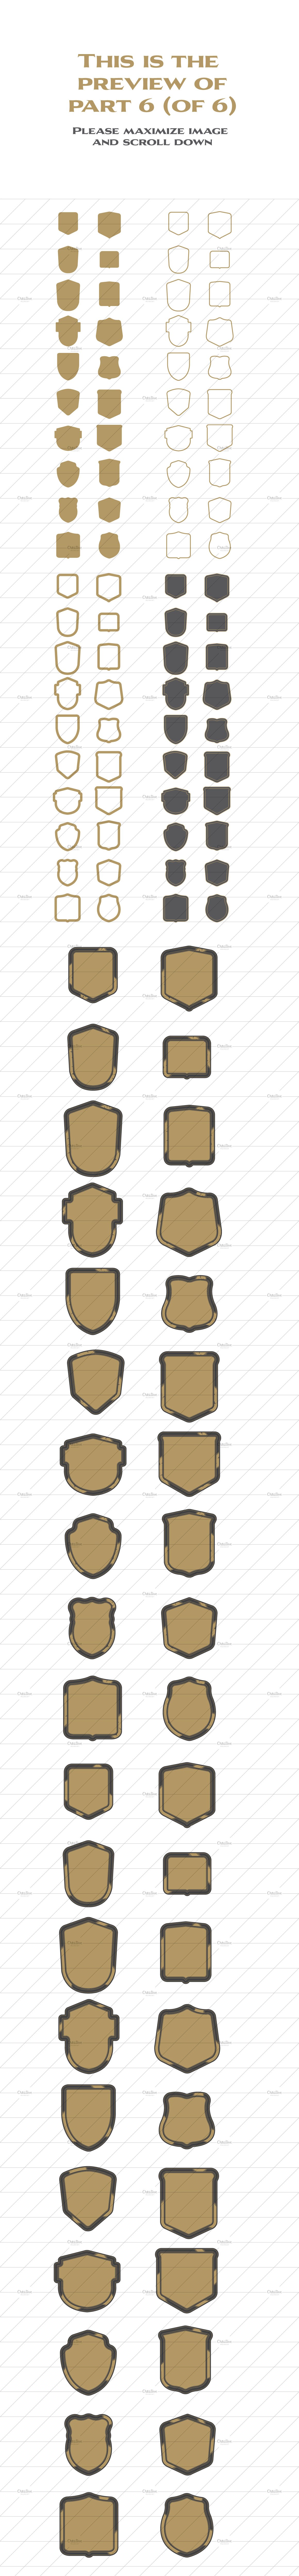 1080 shields shapes vector set base shapes preview part 6 227